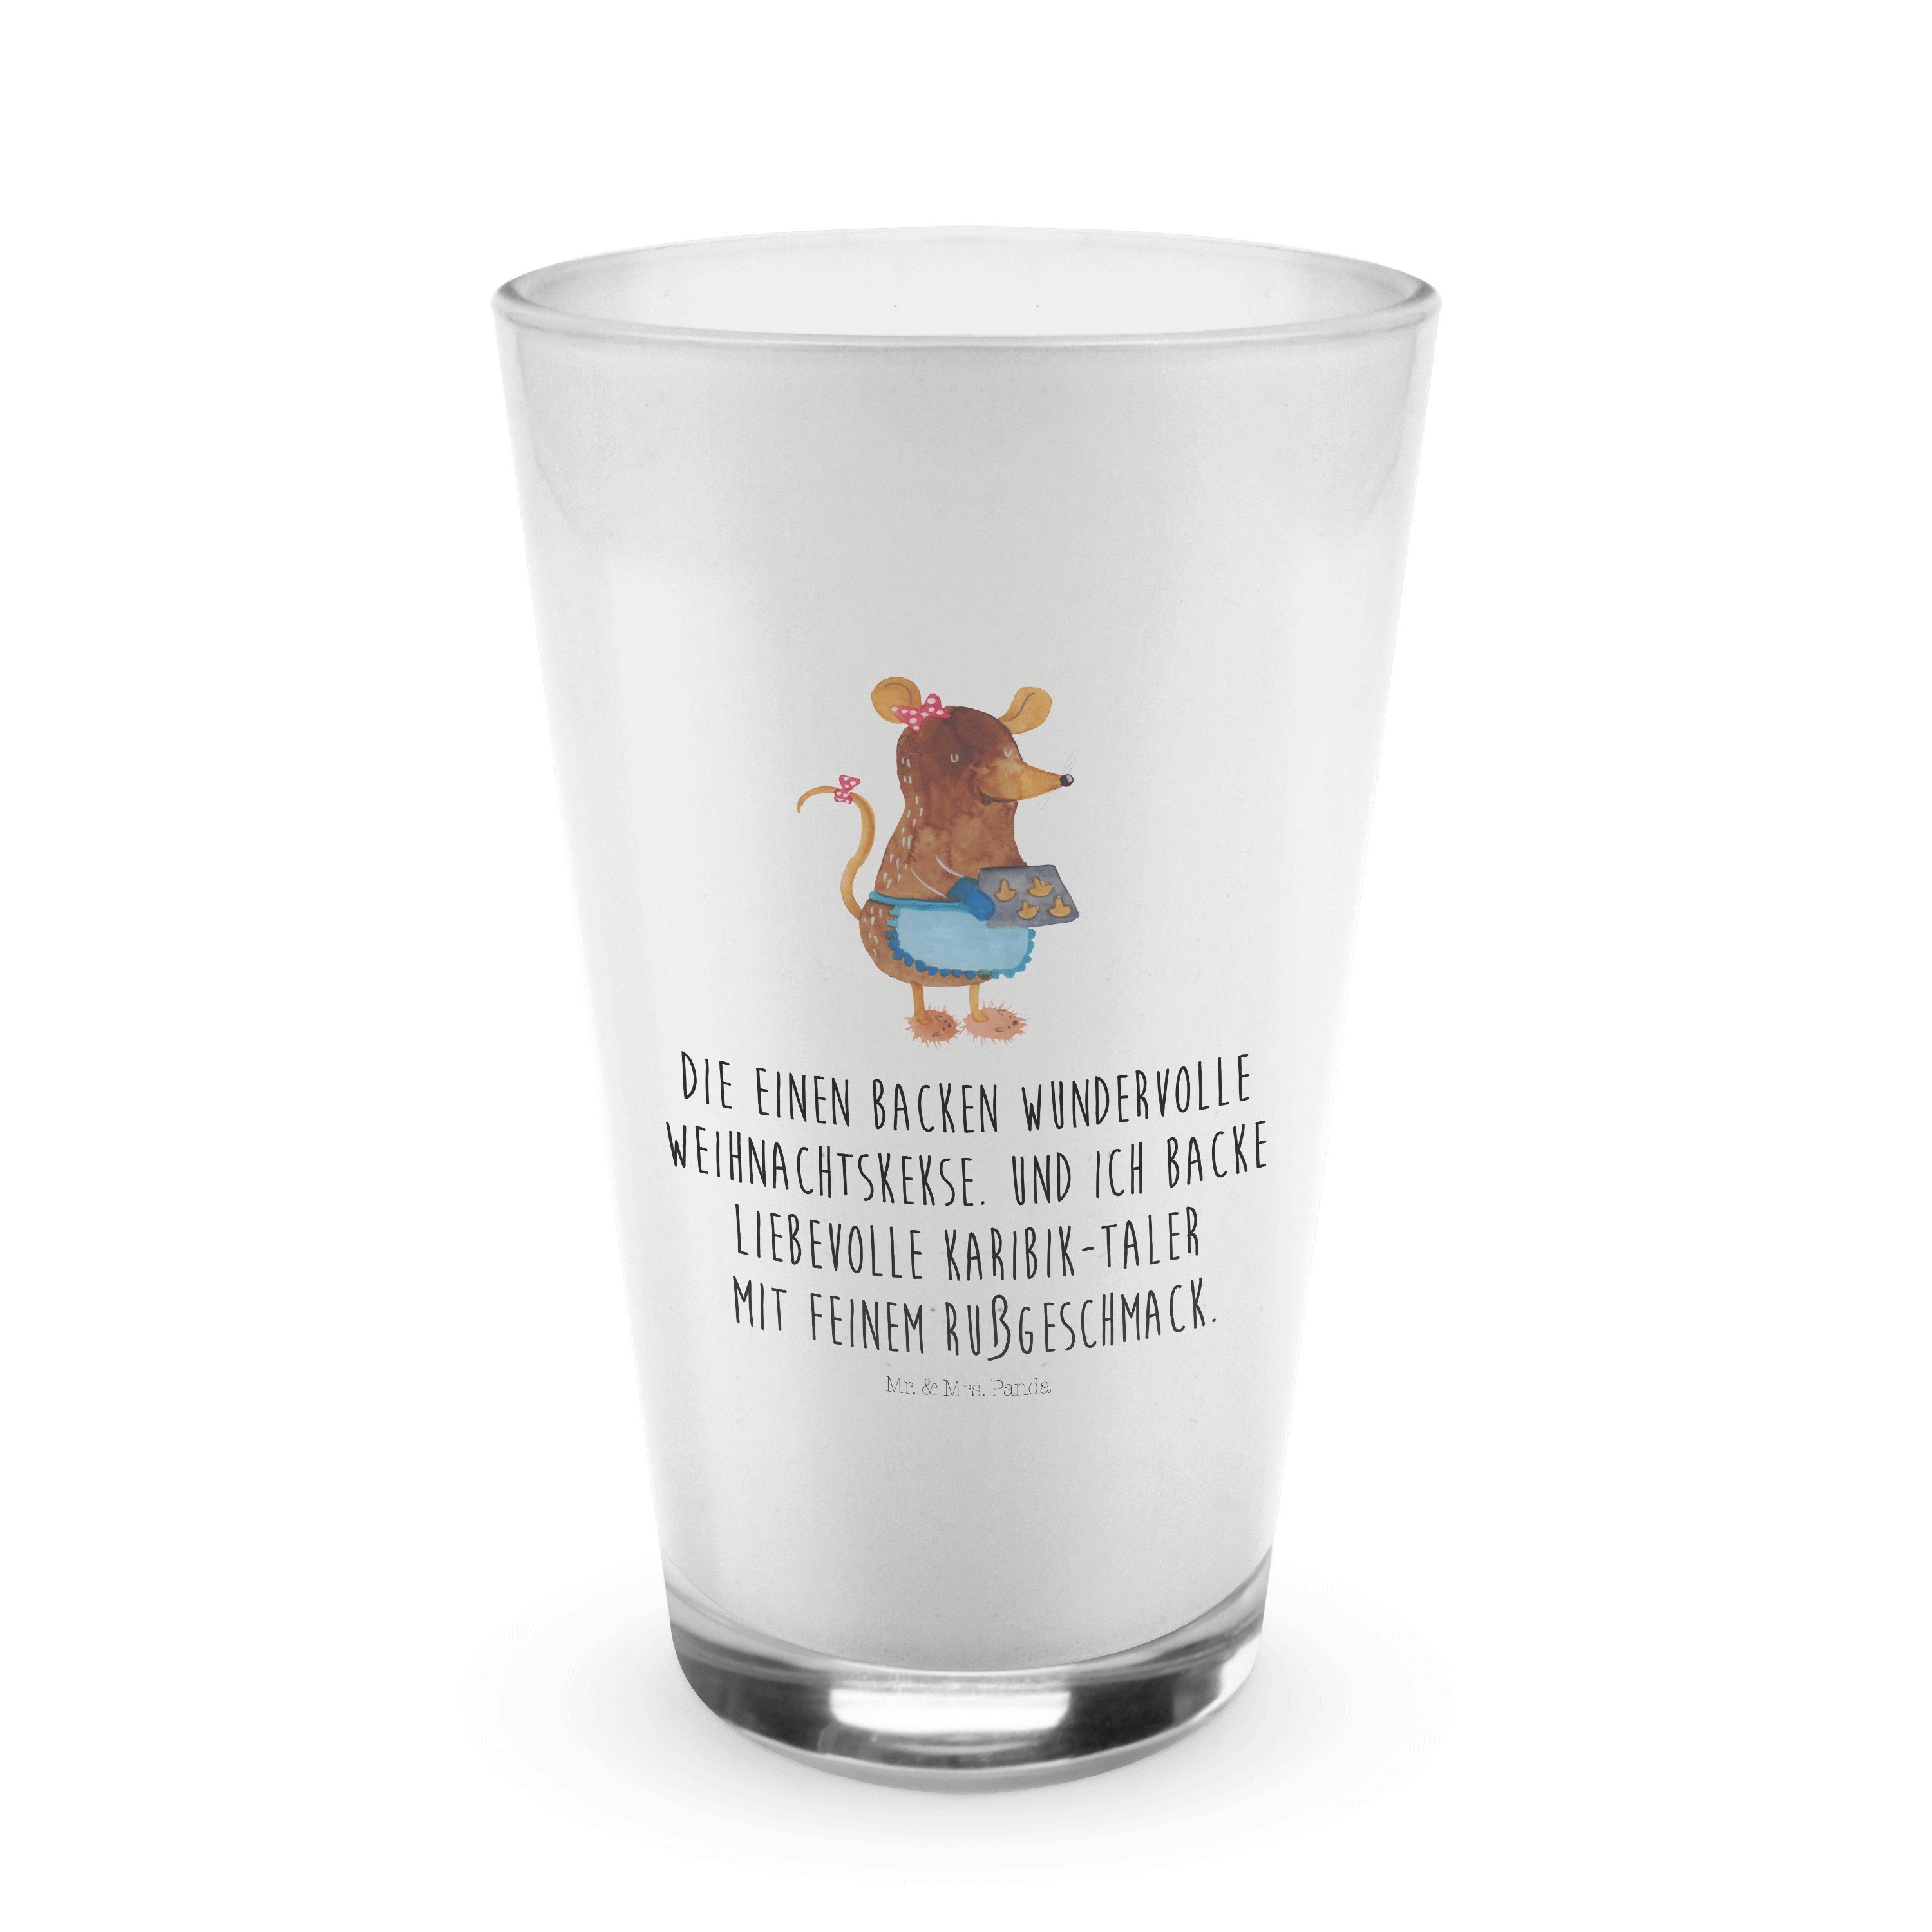 Mr. & Mrs. Panda Glas Maus Kekse - Transparent - Geschenk, Latte Macchiato, Glas, Cappuccin, Premium Glas